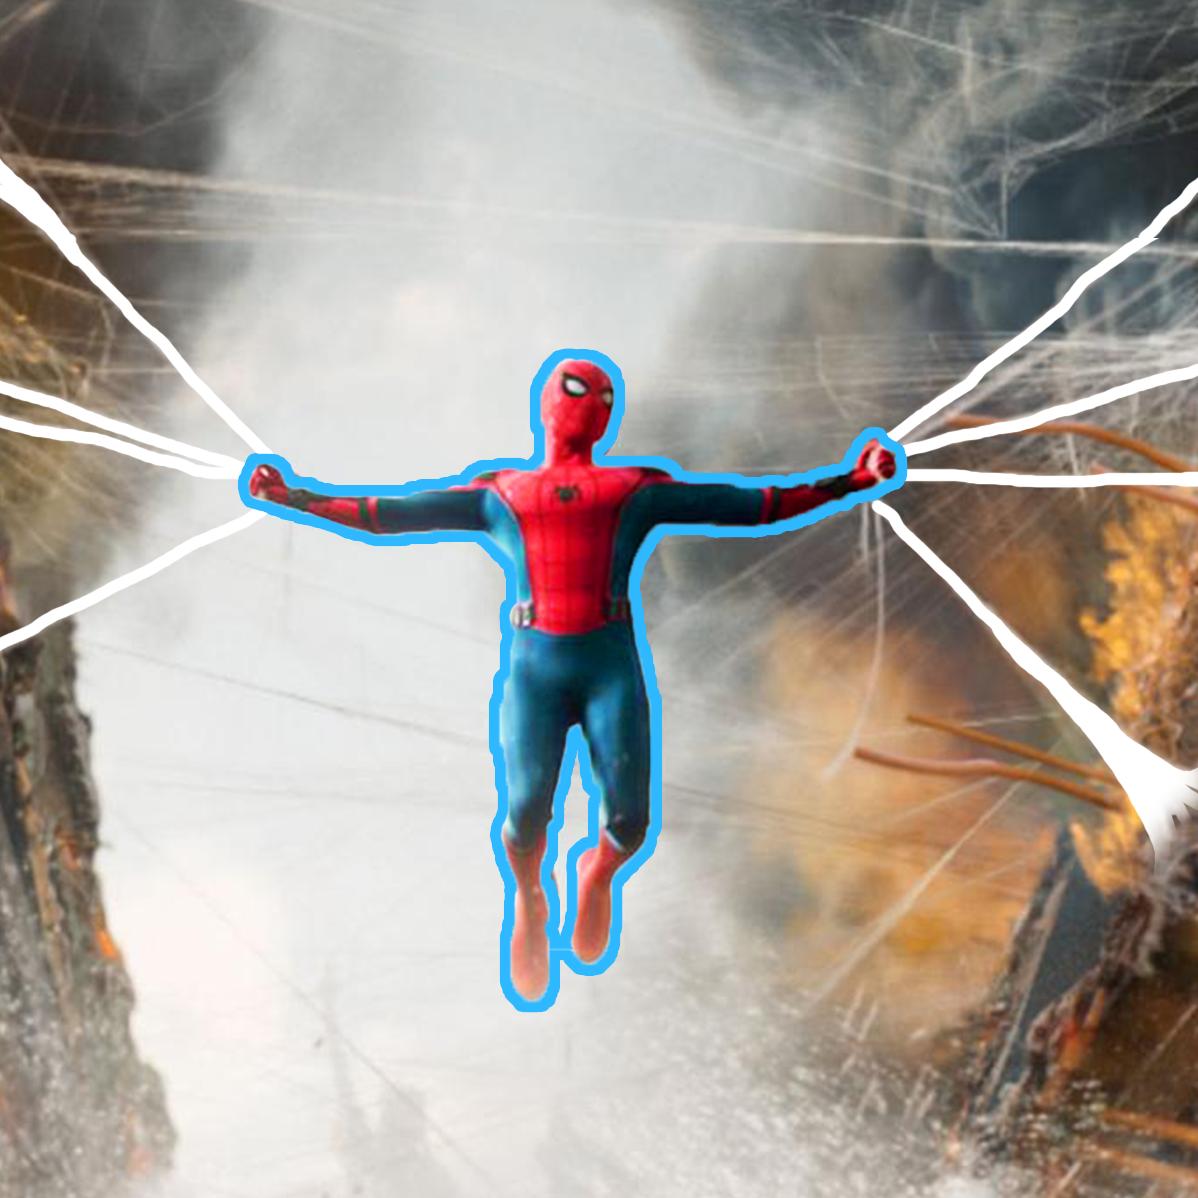 RT @TechAmazing: How Spider-Man's web is shockingly realistic 

via @TechInsider 
https://t.co/kRU1D0zCf2